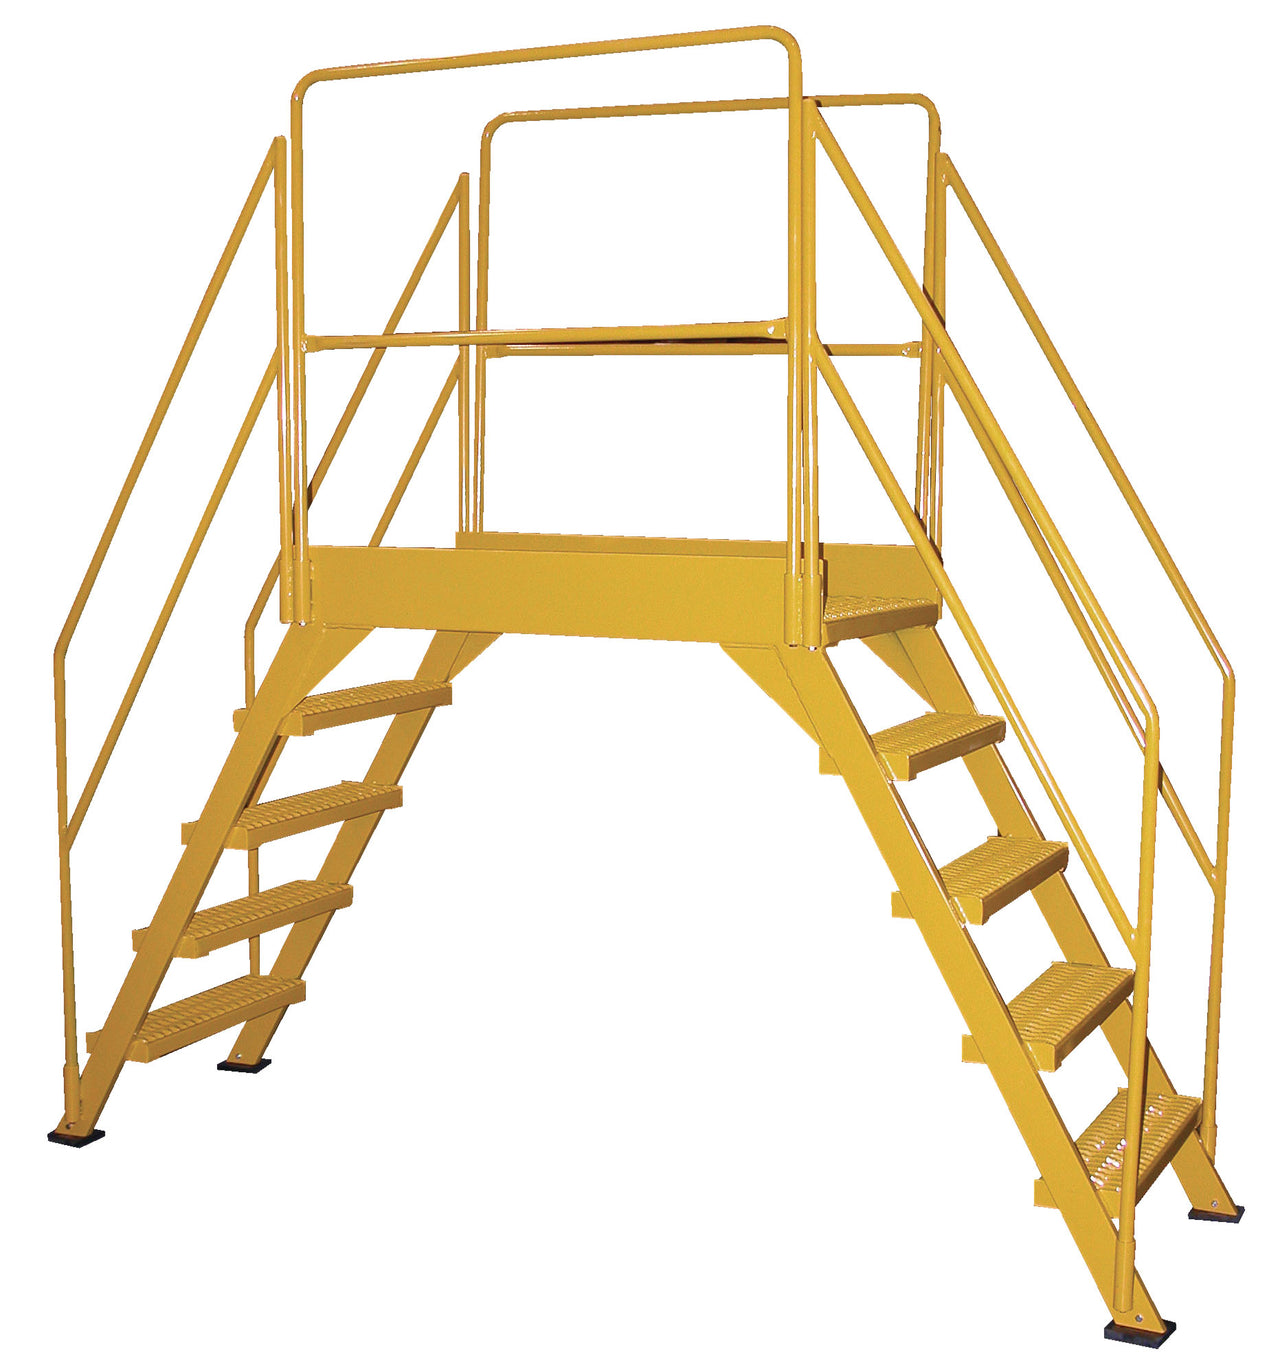 6 Step Cross-Over Ladder w/ 36" Deck